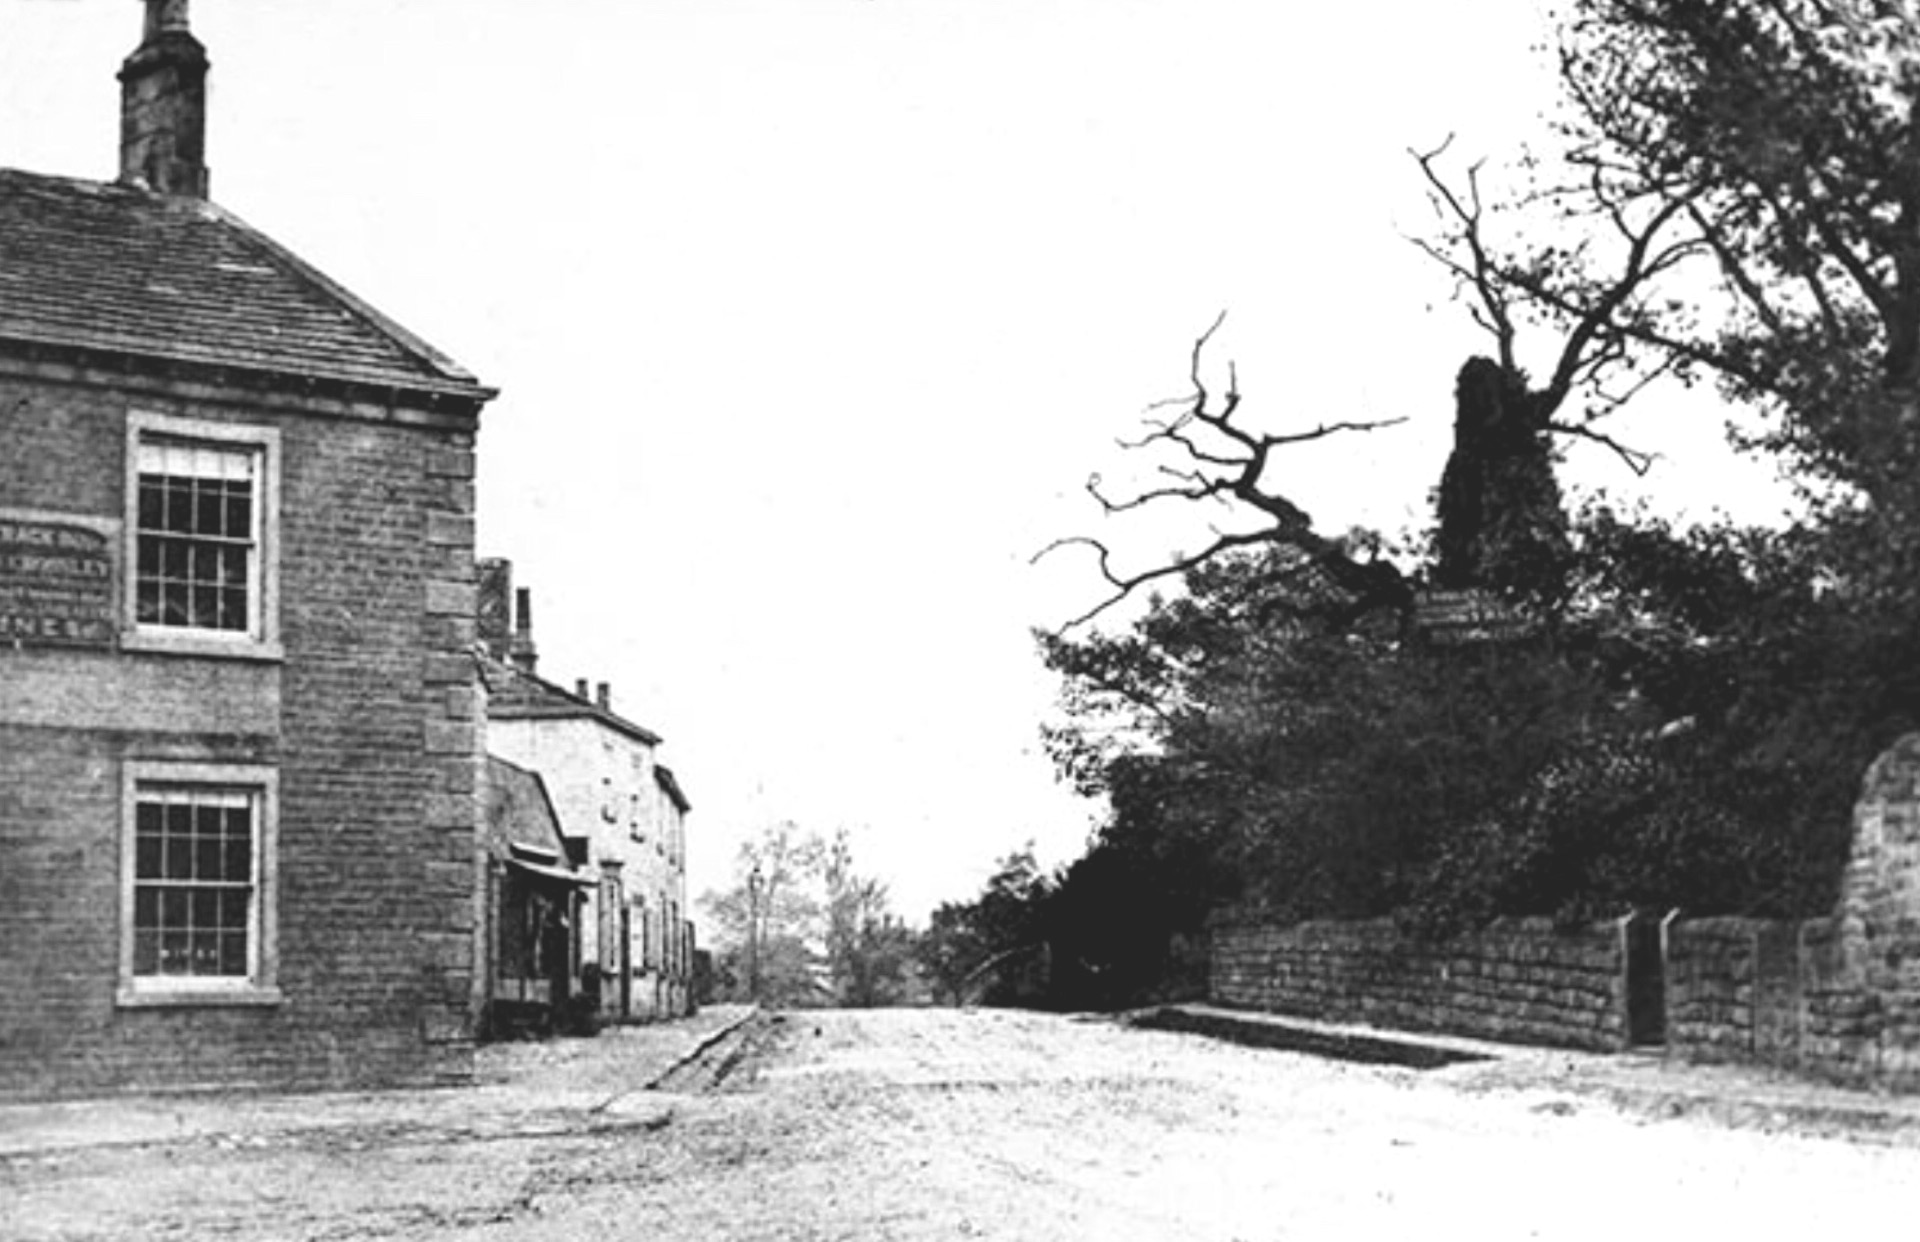  Skyrack Inn and Shire Oak, circa 1852